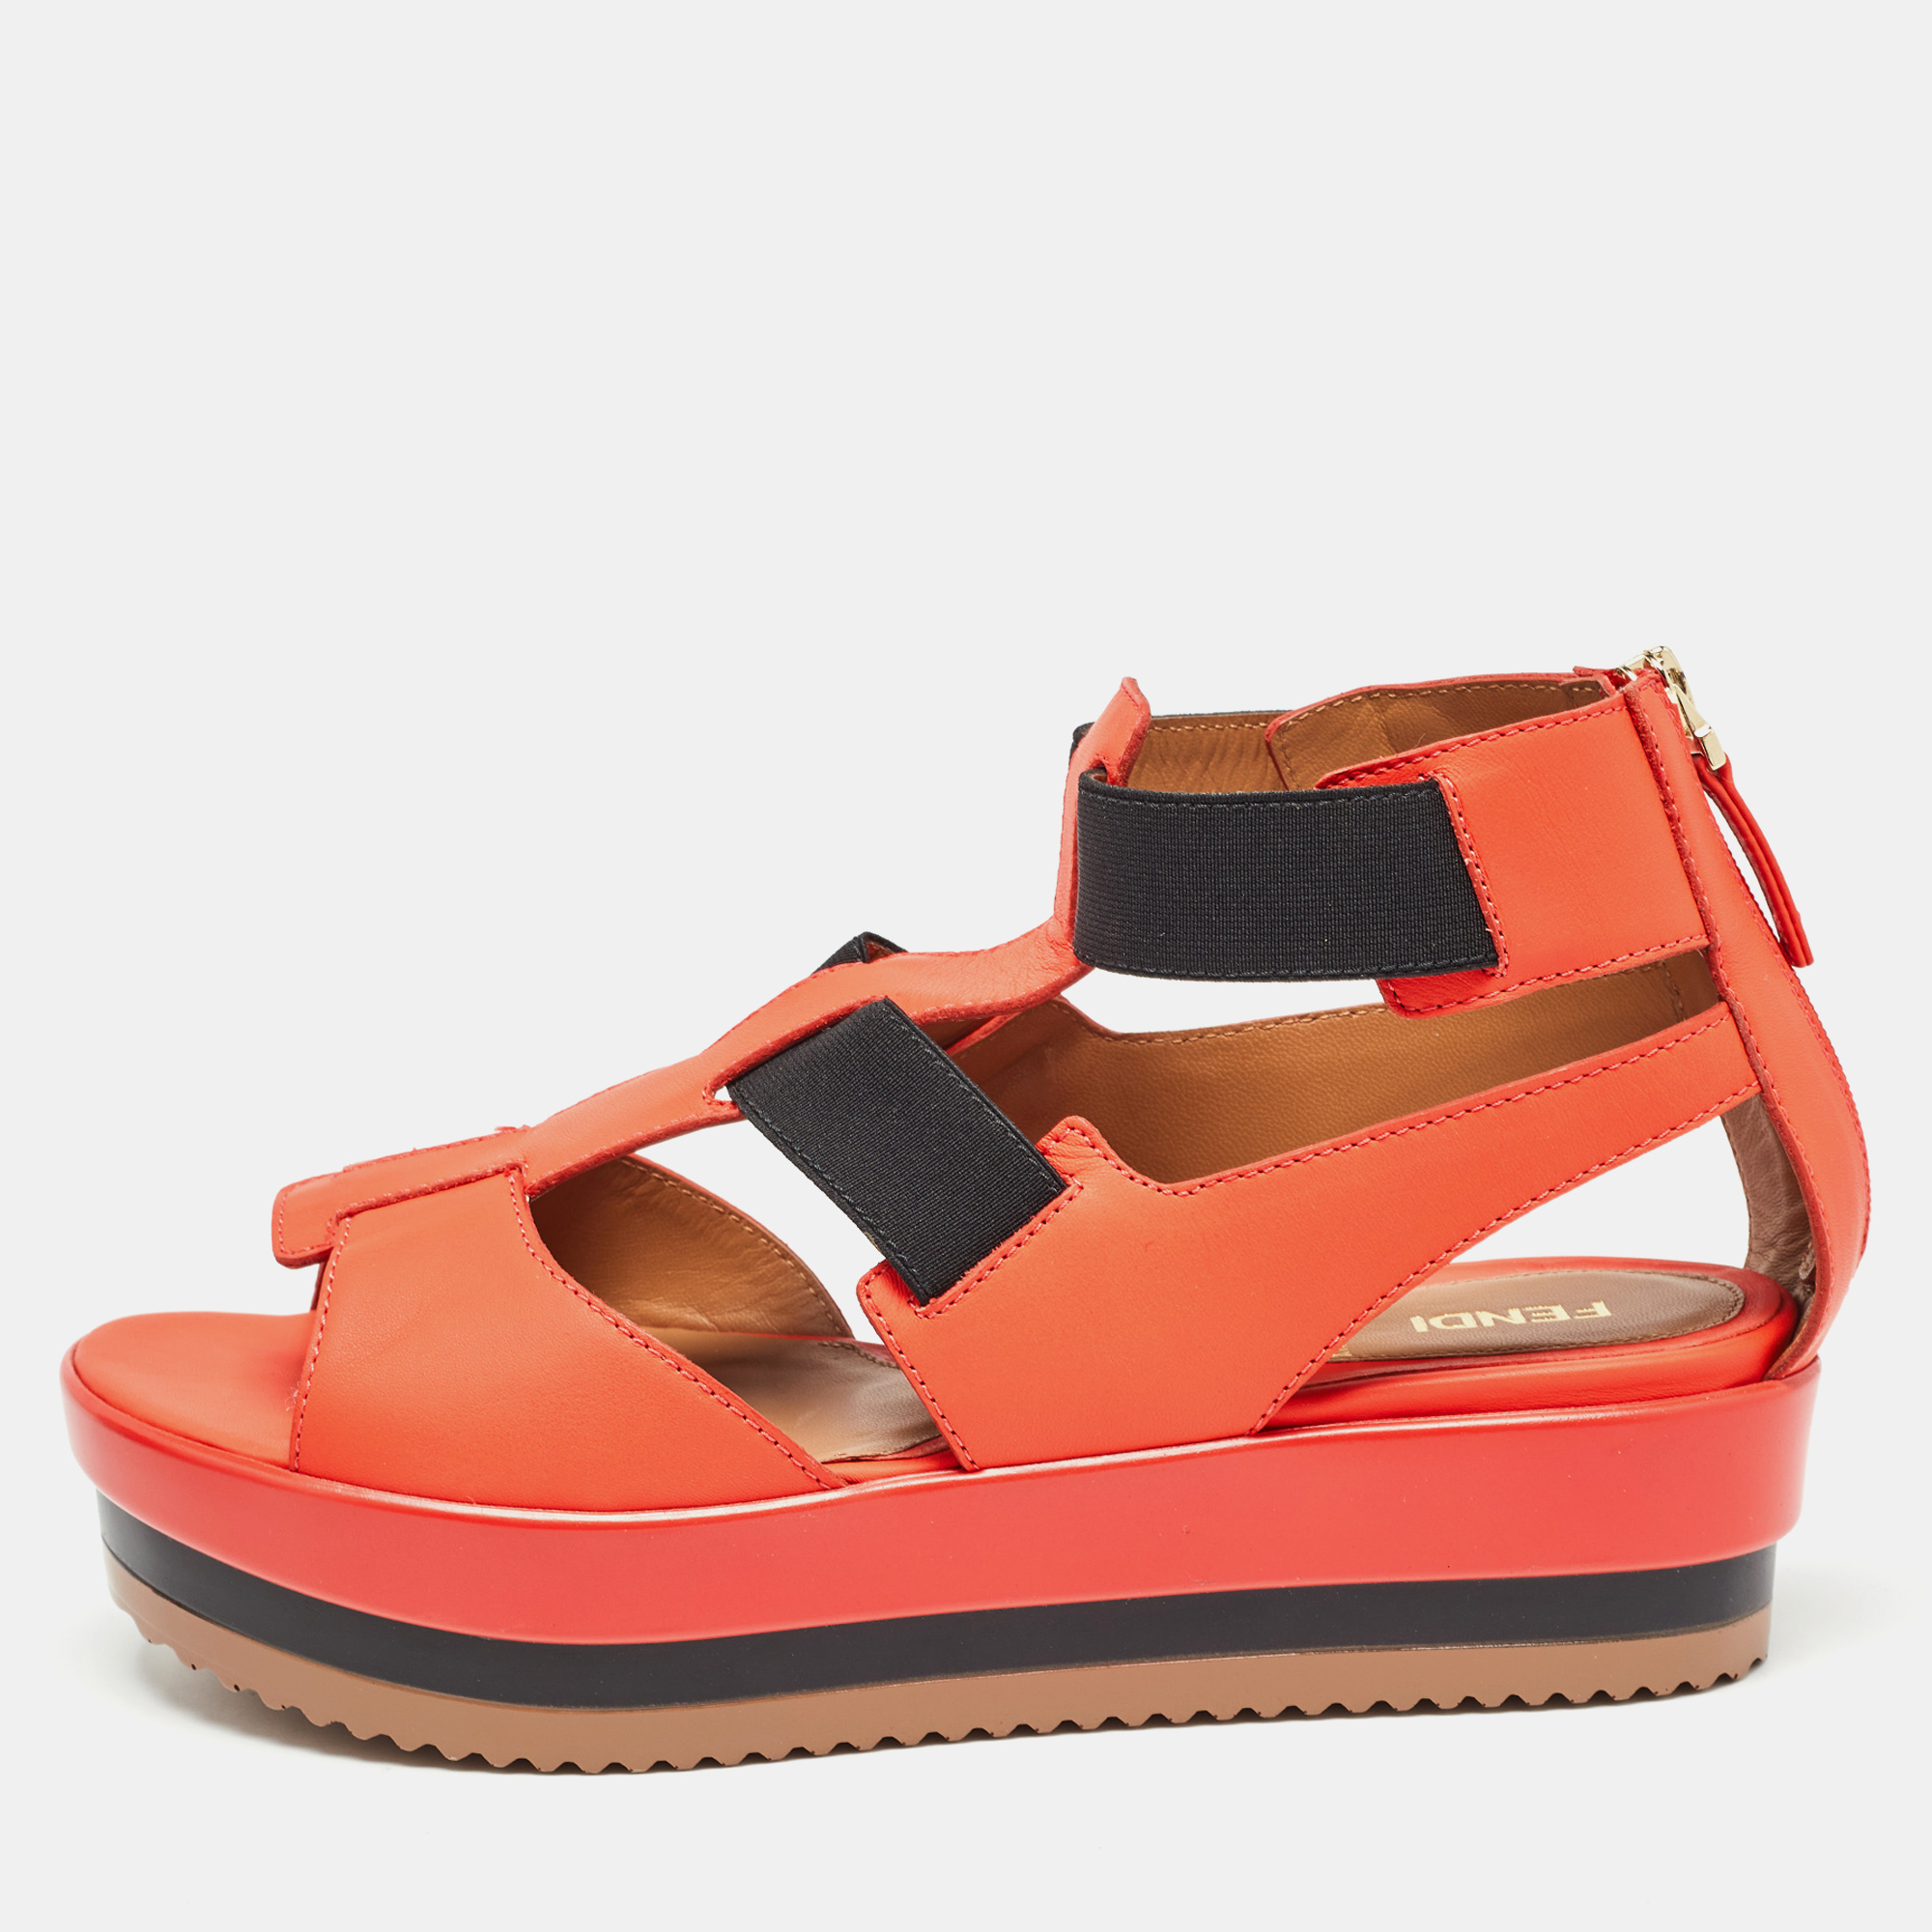 Fendi orange/black leather and elastic wedge platform sandals size 37.5